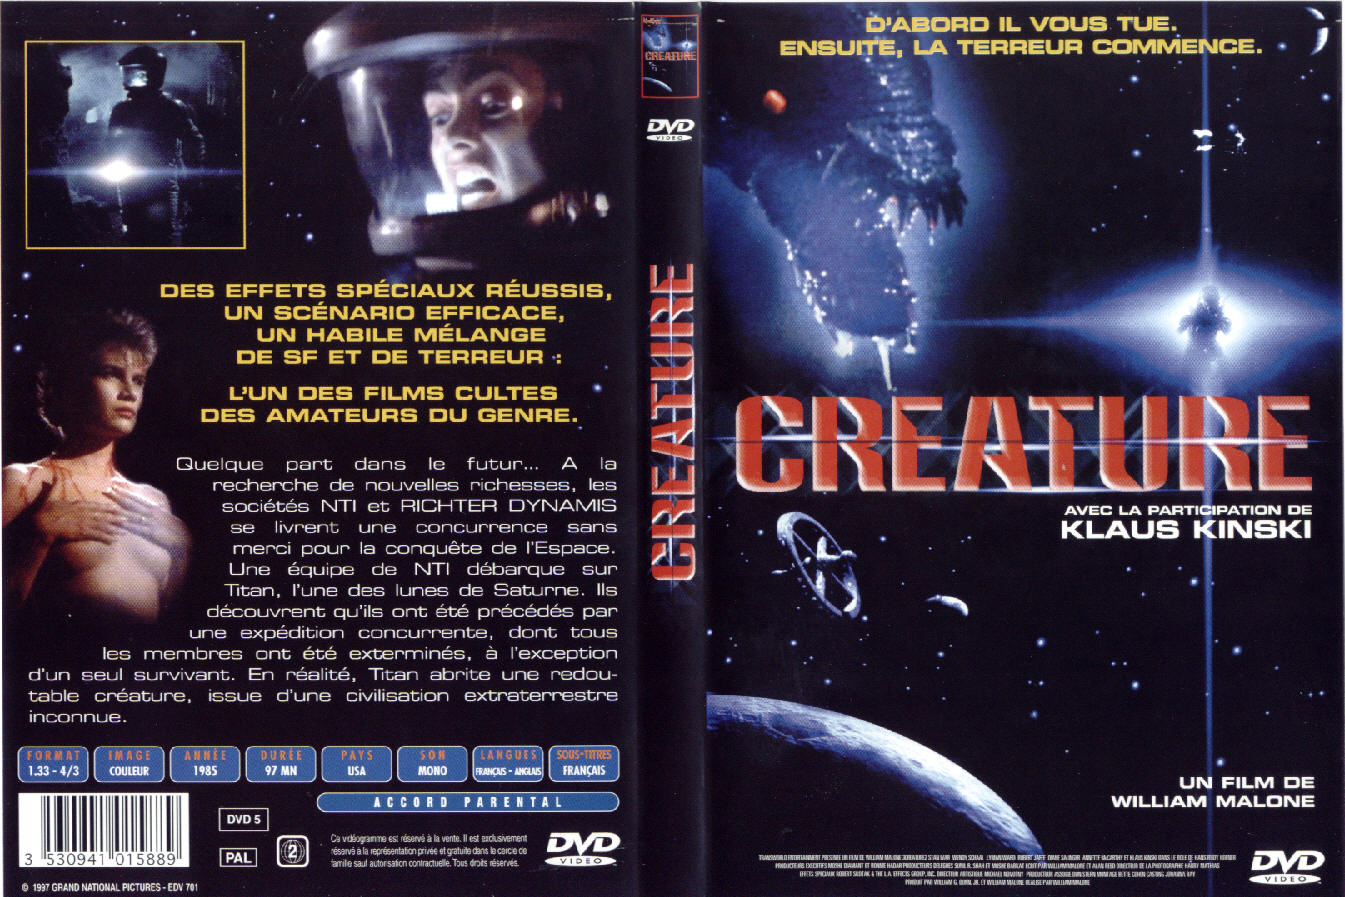 Jaquette DVD Creature (1985)